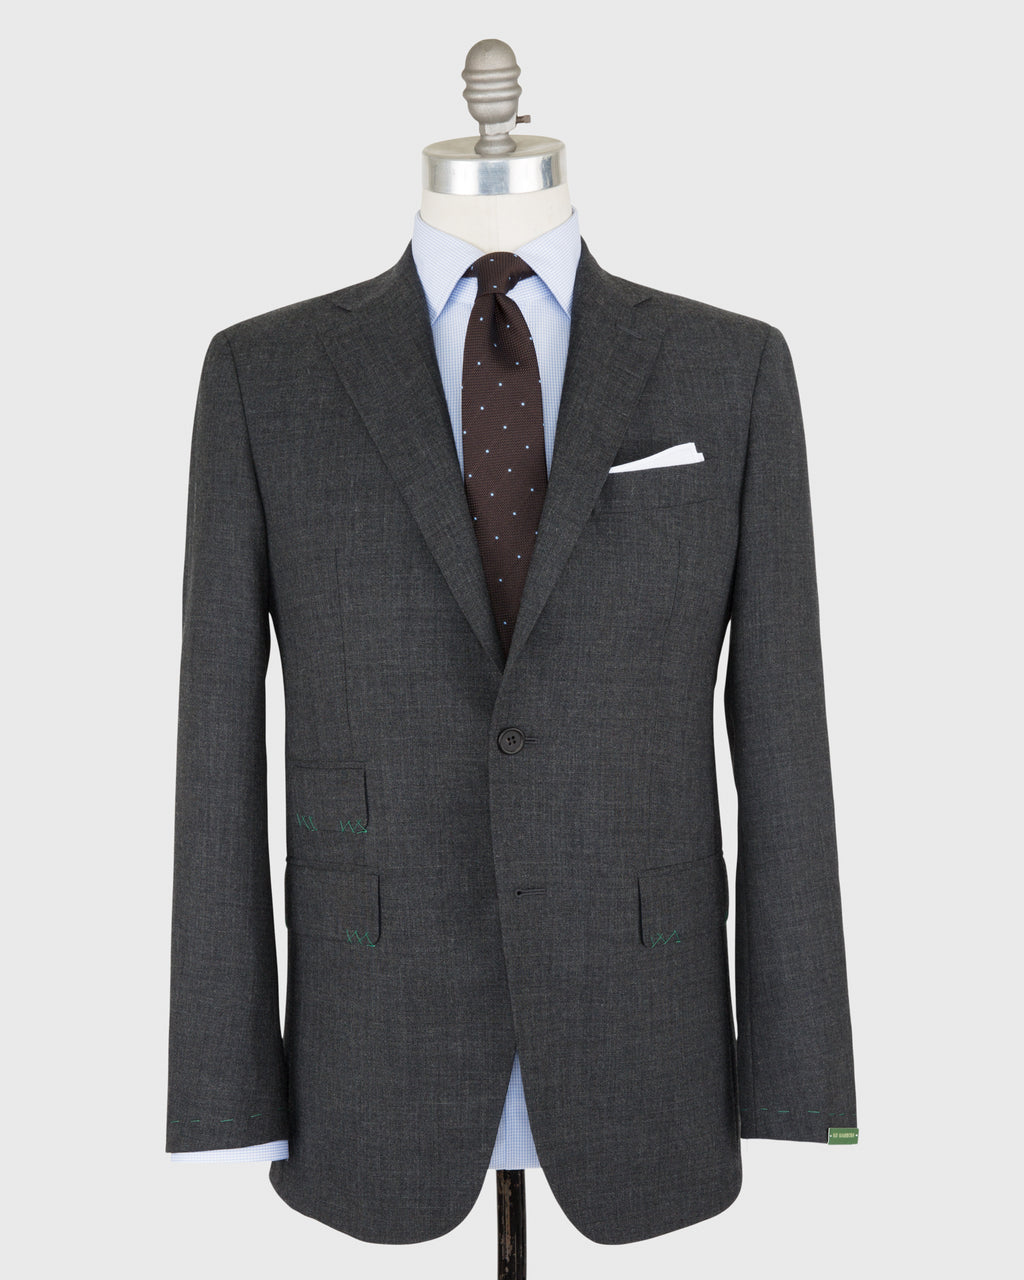 Kincaid No. 3 Suit Charcoal High-Twist